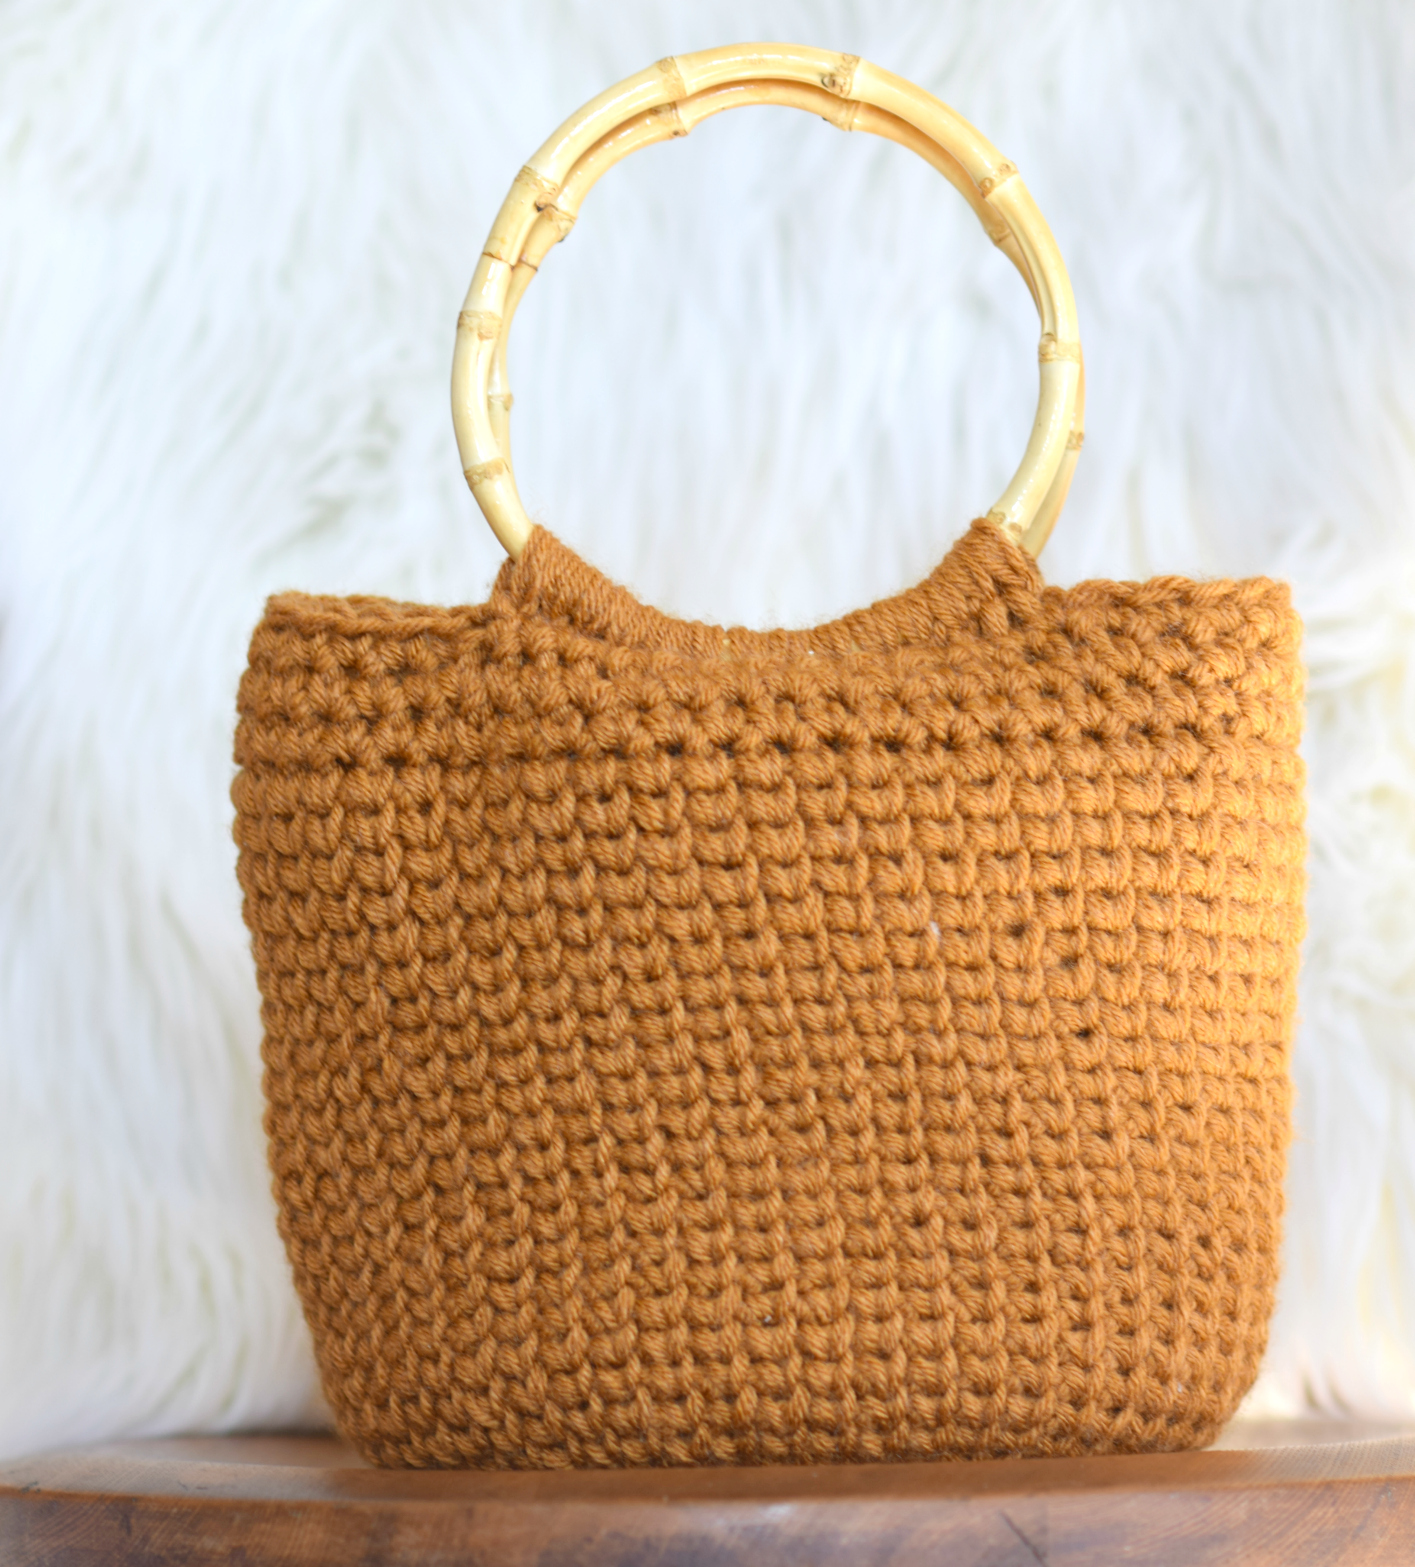 Caribe Big Crocheted Bag Pattern – Mama In A Stitch